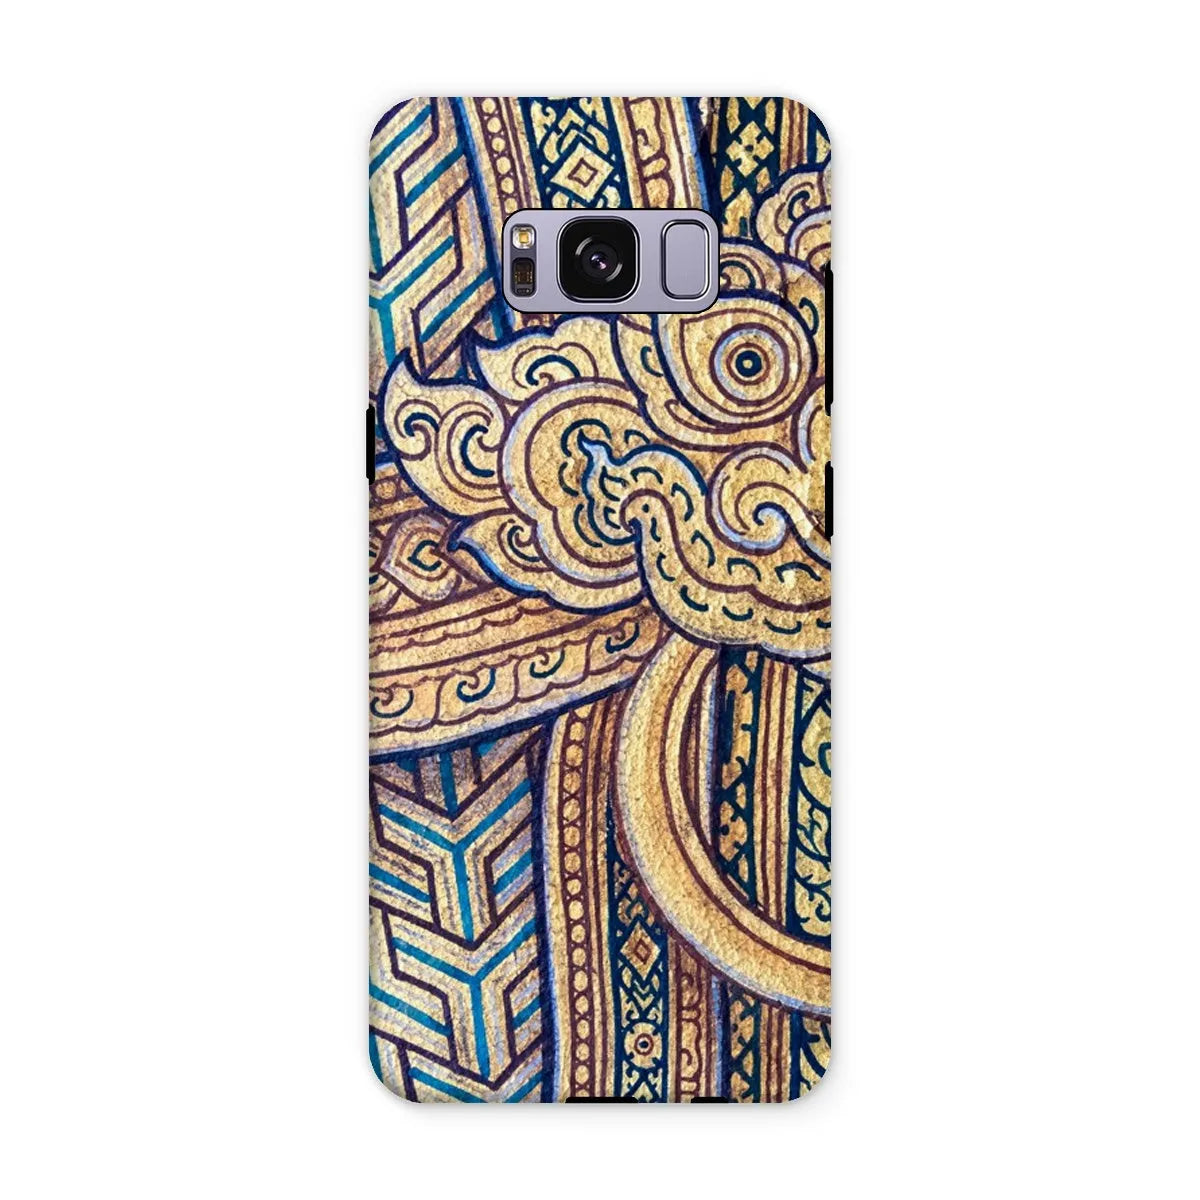 Man’s Best Friend - Thai Aesthetic Art Phone Case - Samsung Galaxy S8 Plus / Matte - Mobile Phone Cases - Aesthetic Art